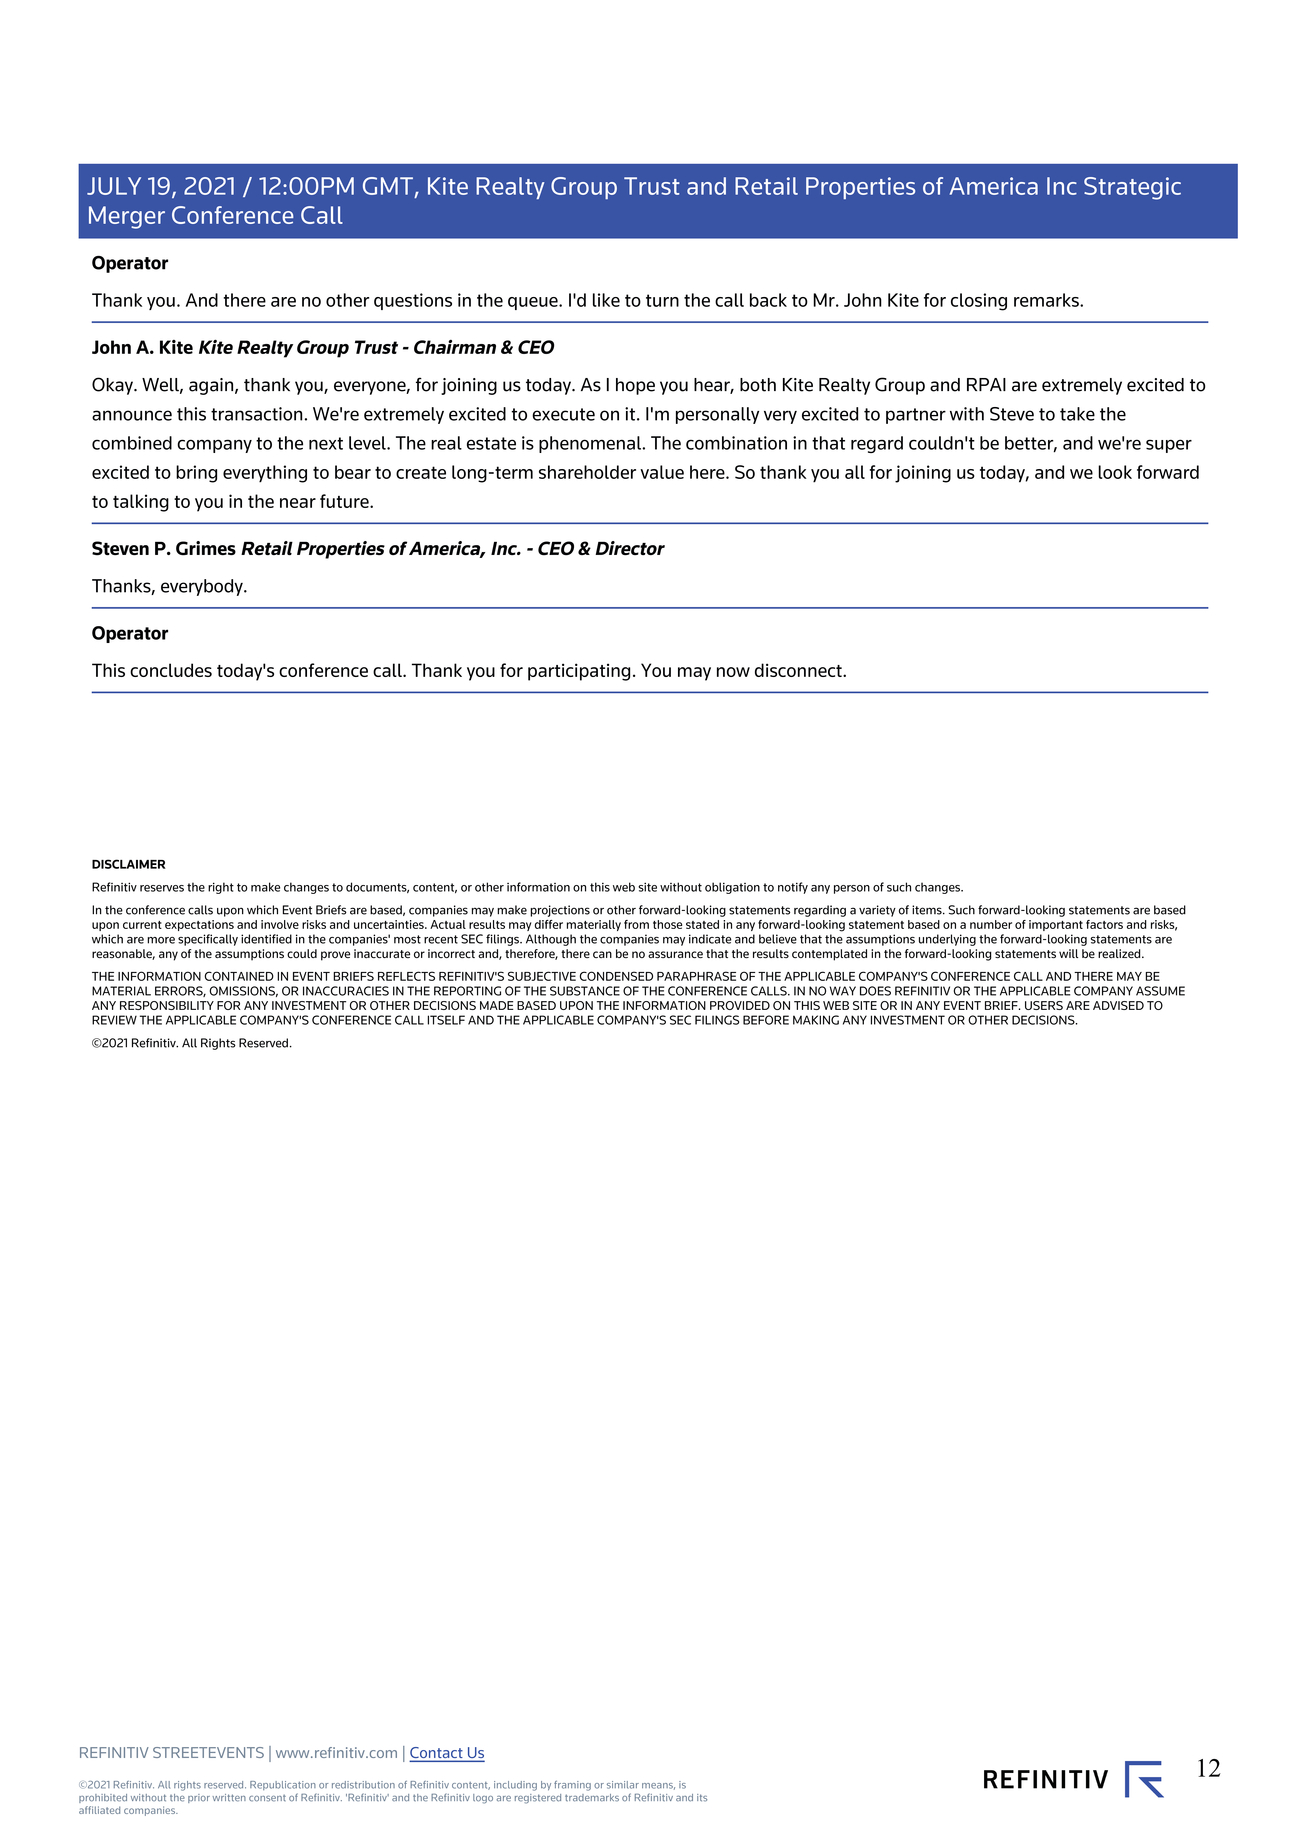 New Microsoft Word Document_page2021 julpage019 krg rpai strategic merger transcript_page011.jpg